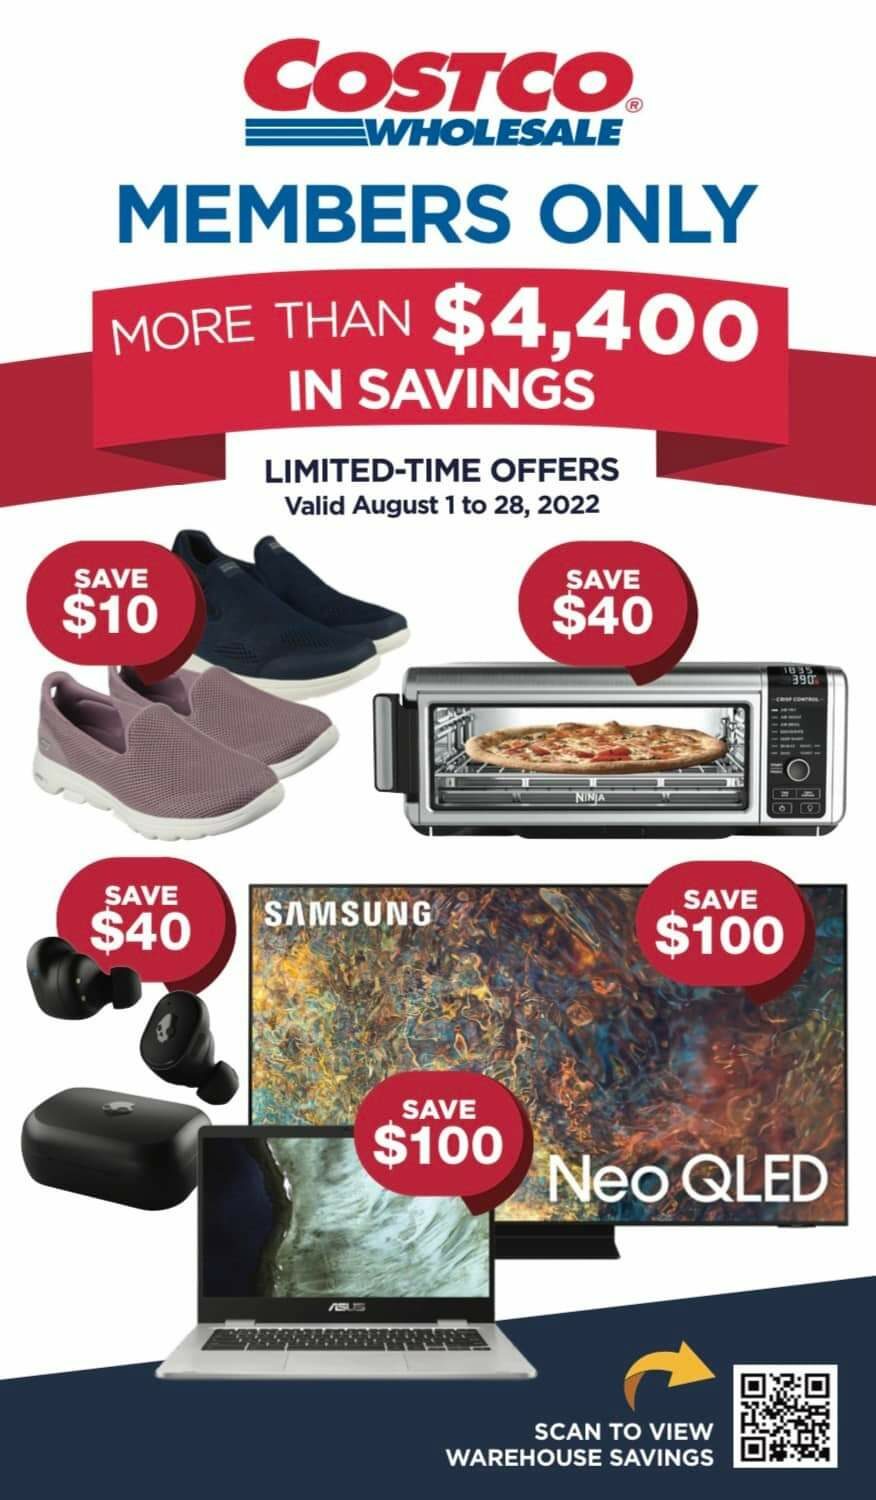 Costco November Member-Only Savings 2023 - Ad & Deals